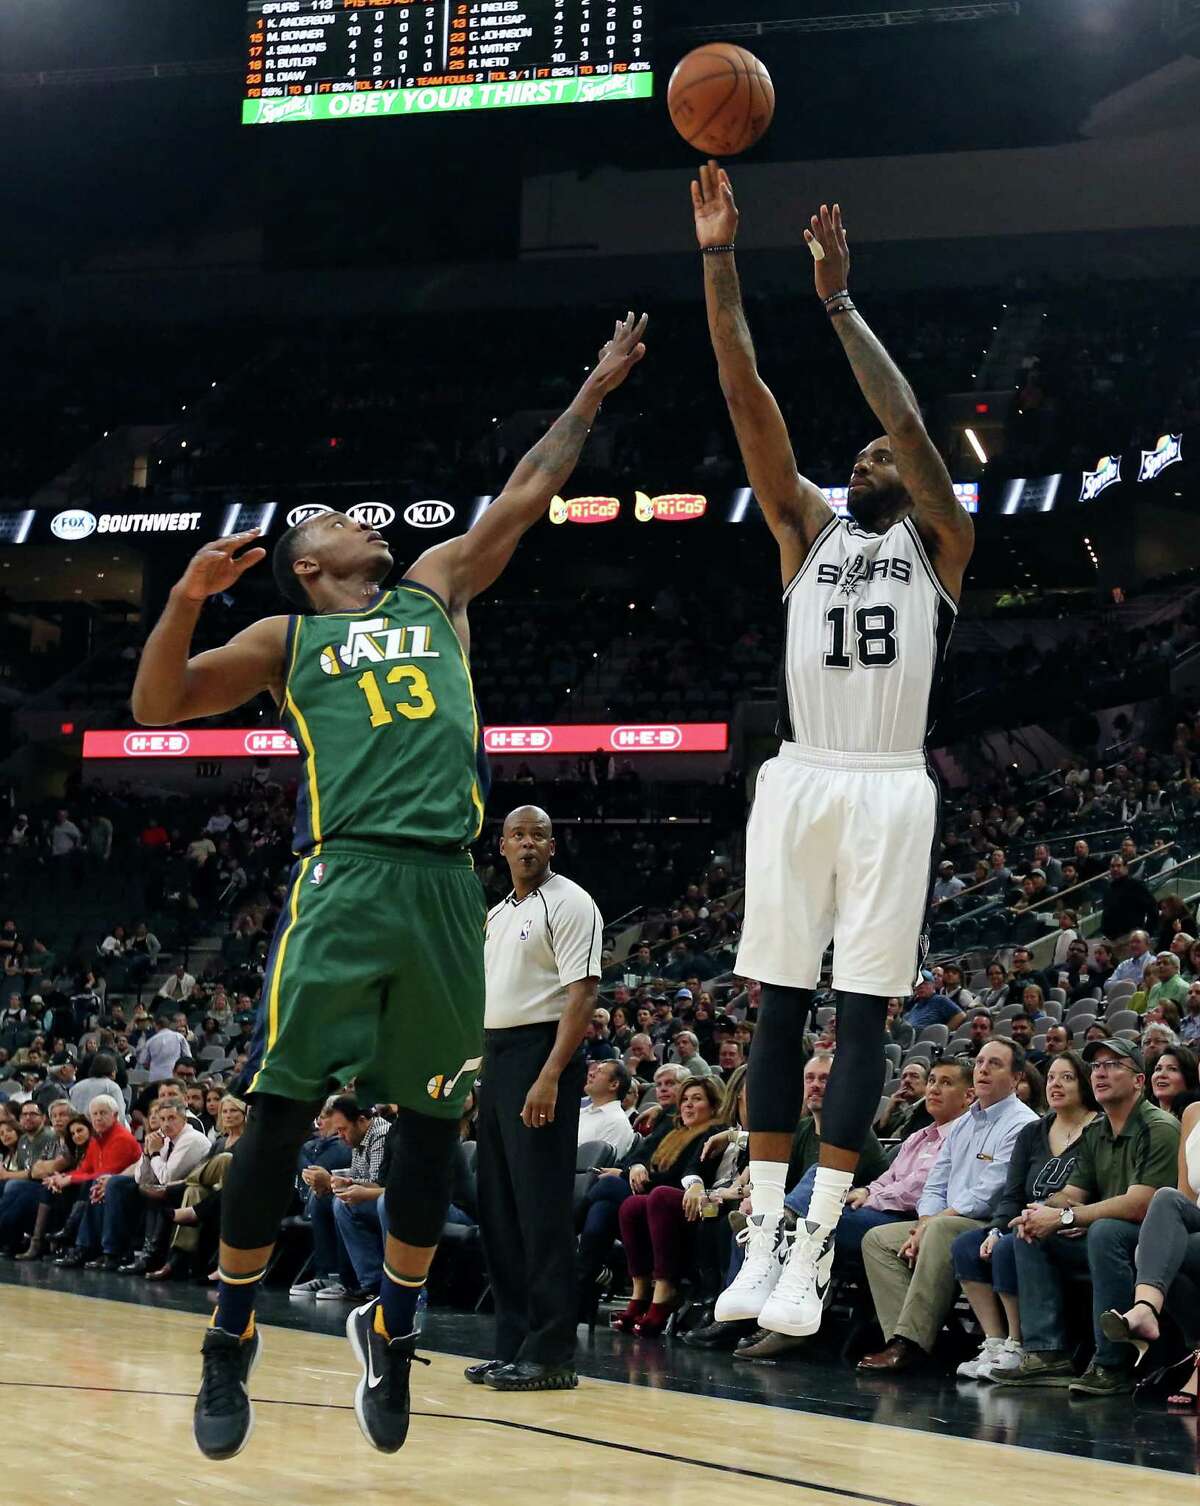 San Antonio Spurs' Rasual Butler shoots over Utah Jazz's Elijah Millsap during second half action Monday Dec. 14, 2015 at the AT&T Center. The Spurs won 118-81.